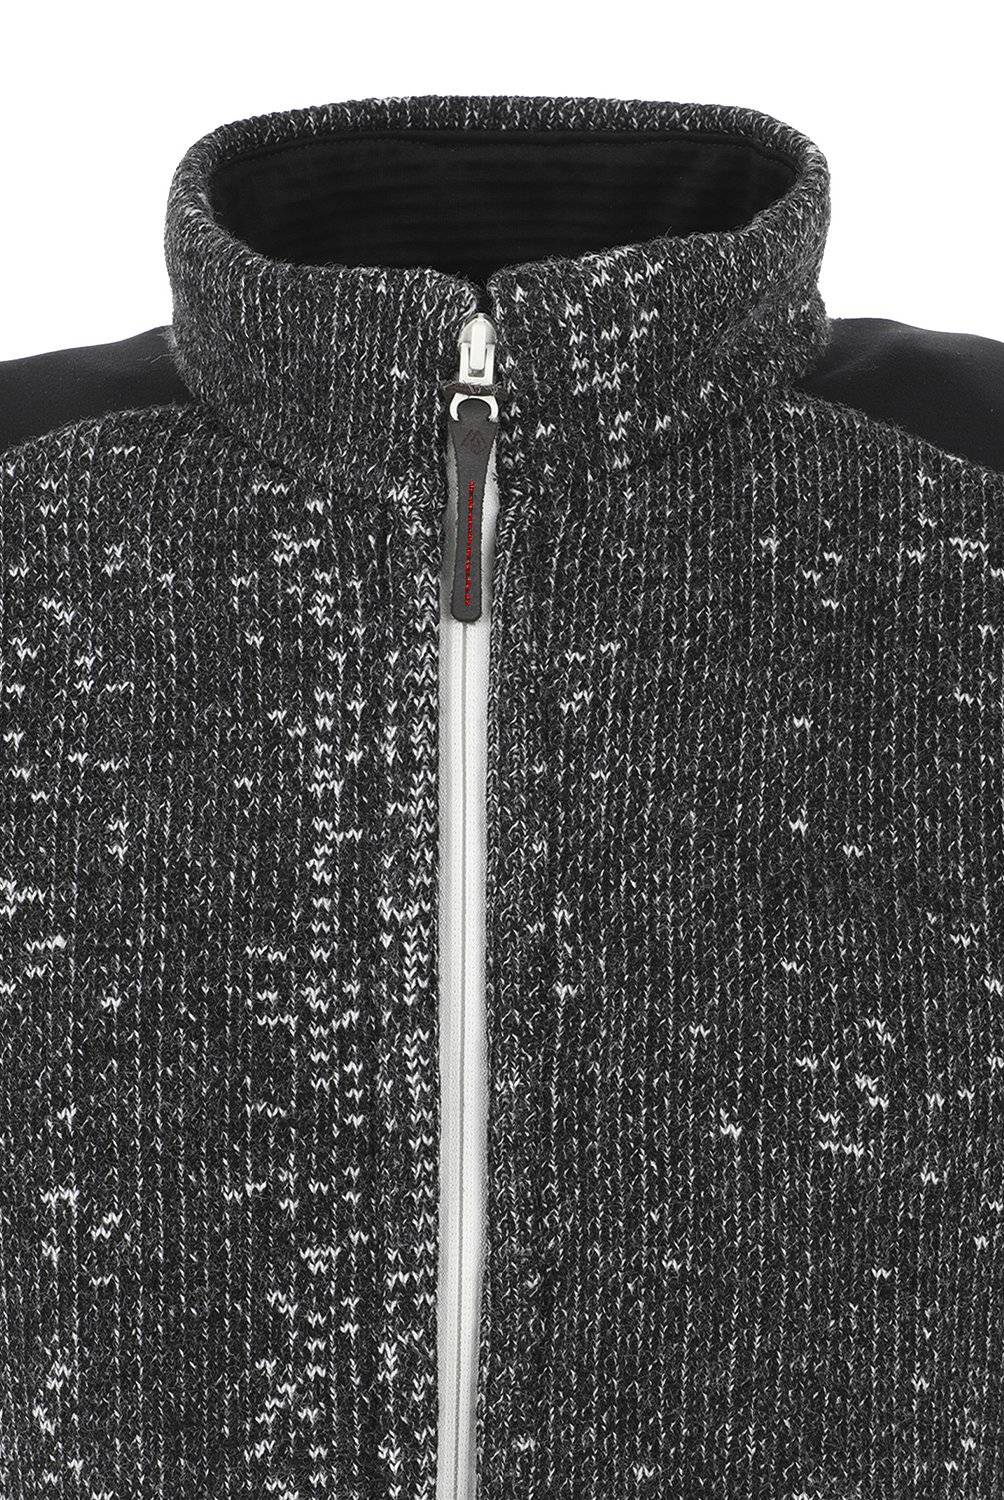 Generico - Koojni Sweater - Full Zip - Jacquard